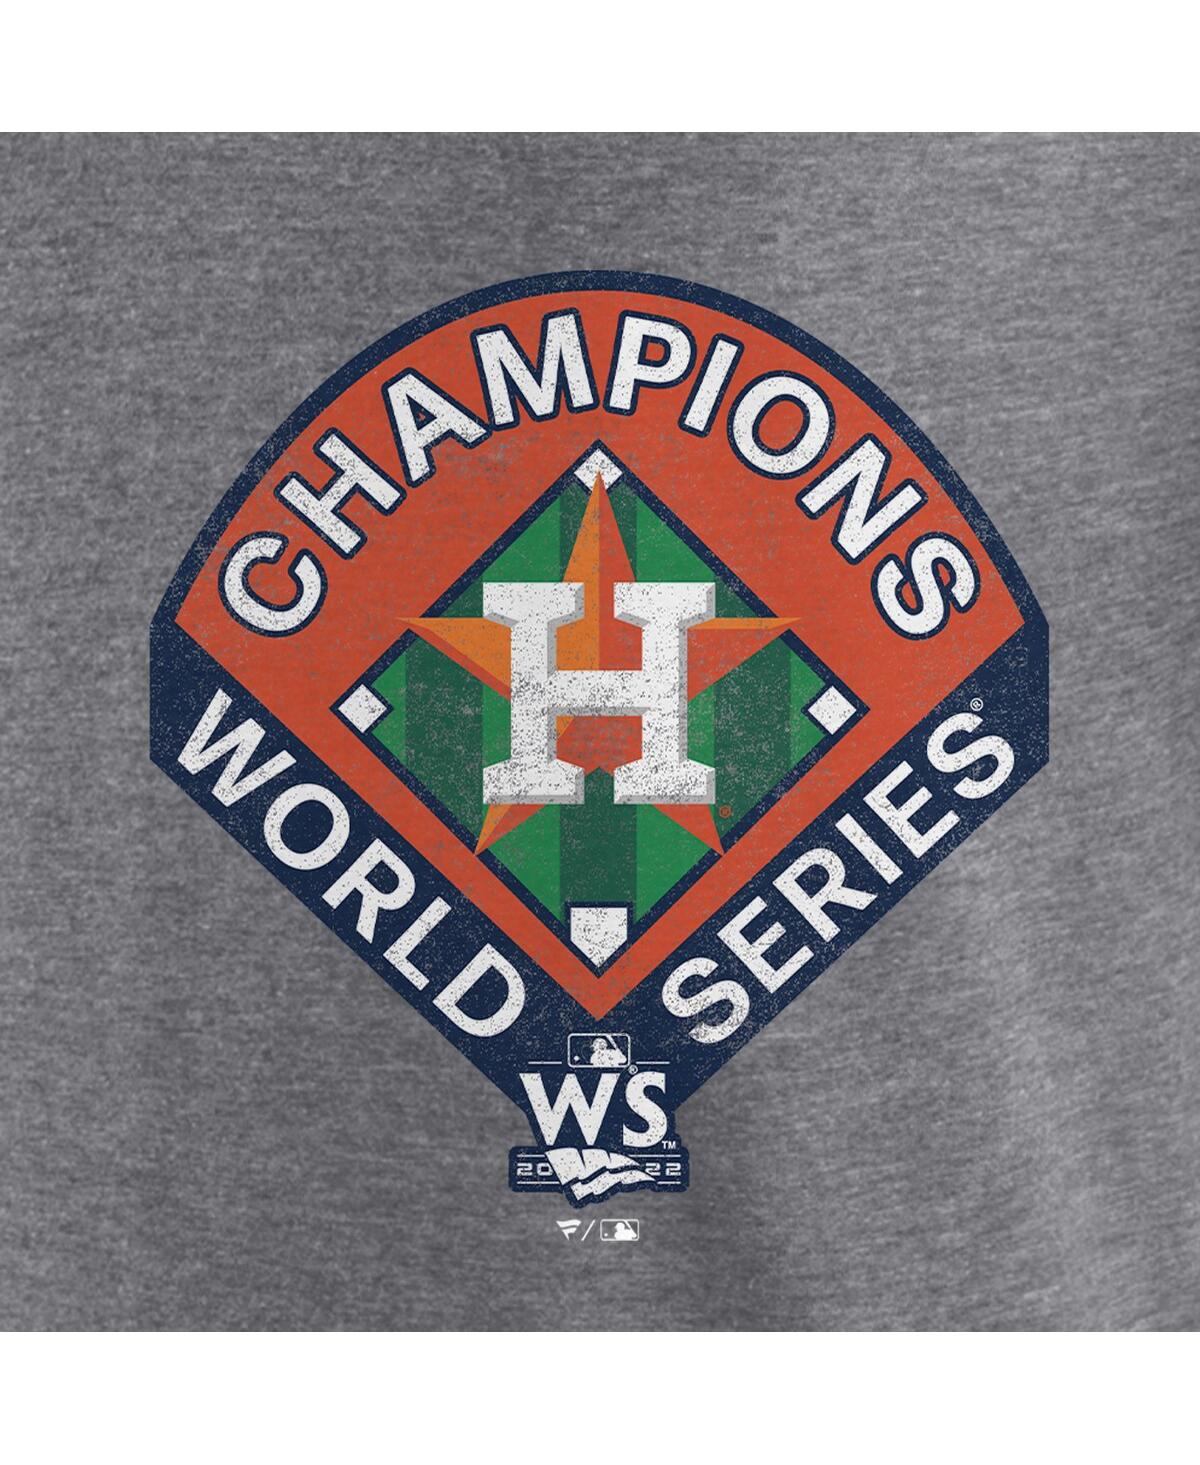 Shop Fanatics Men's  Heather Gray Houston Astros 2022 World Series Champions Complete Game T-shirt